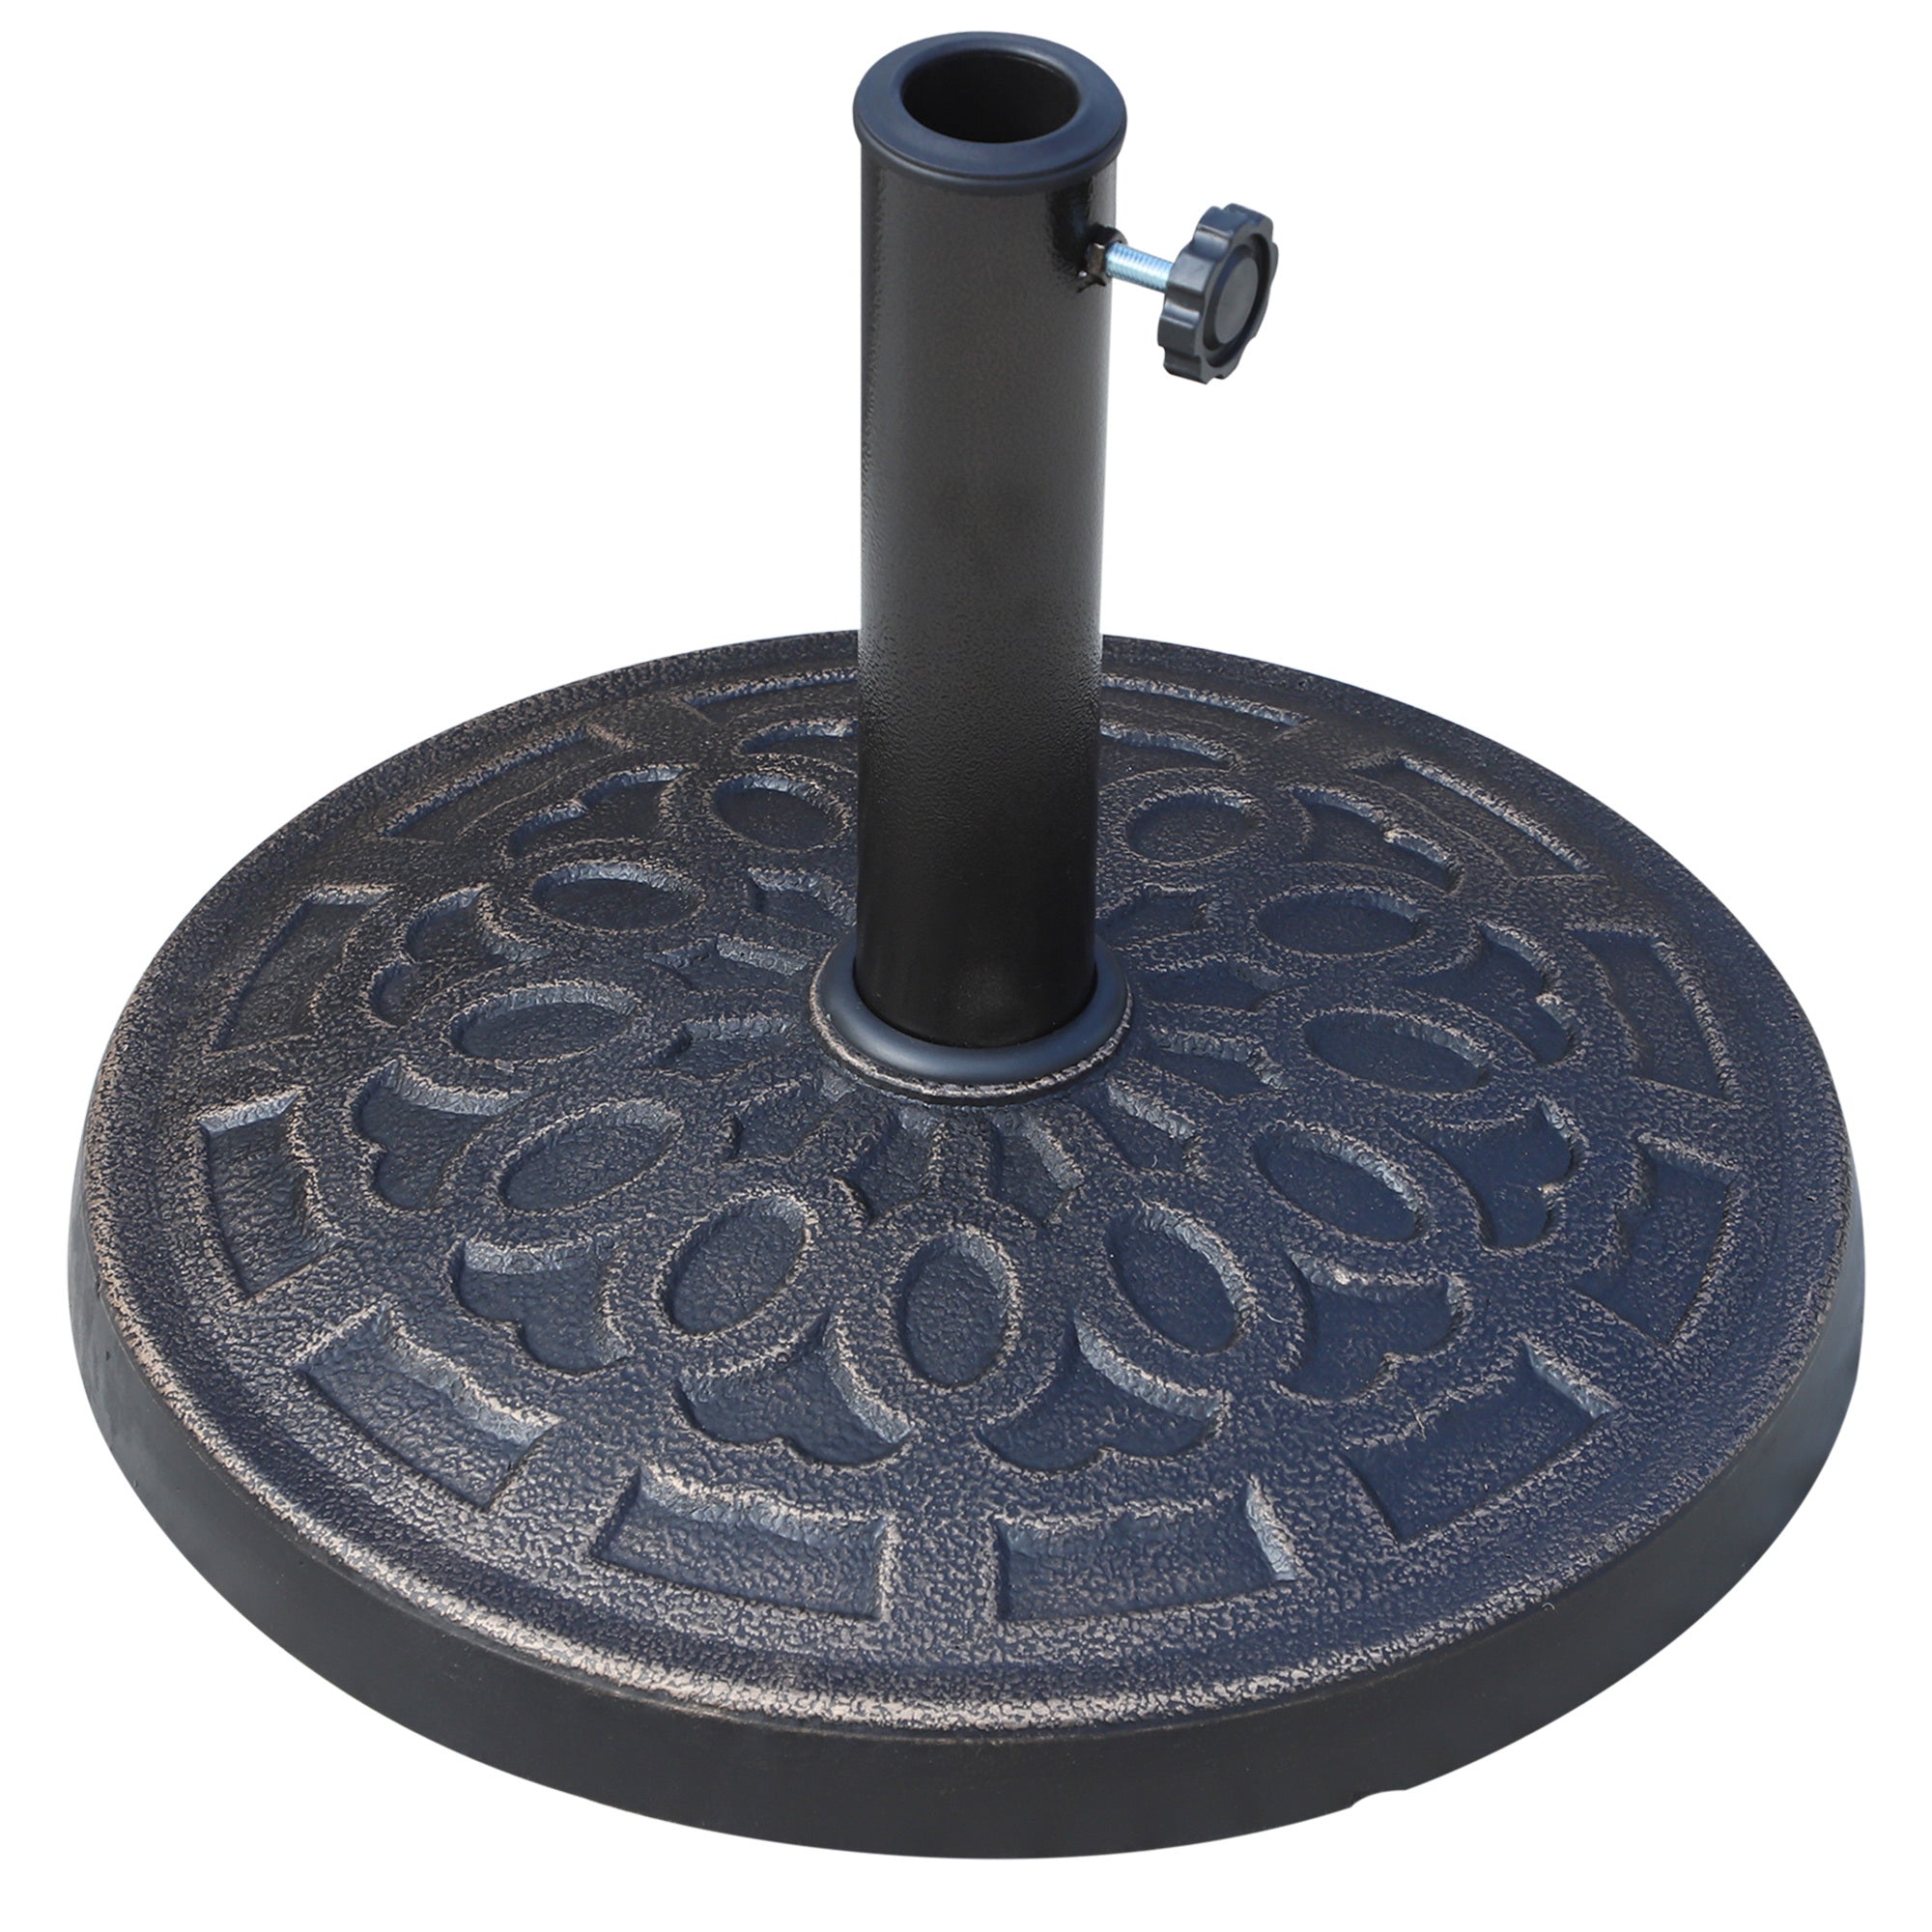 17" 26 lbs Round Resin Umbrella Base Stand Market bronze-stone